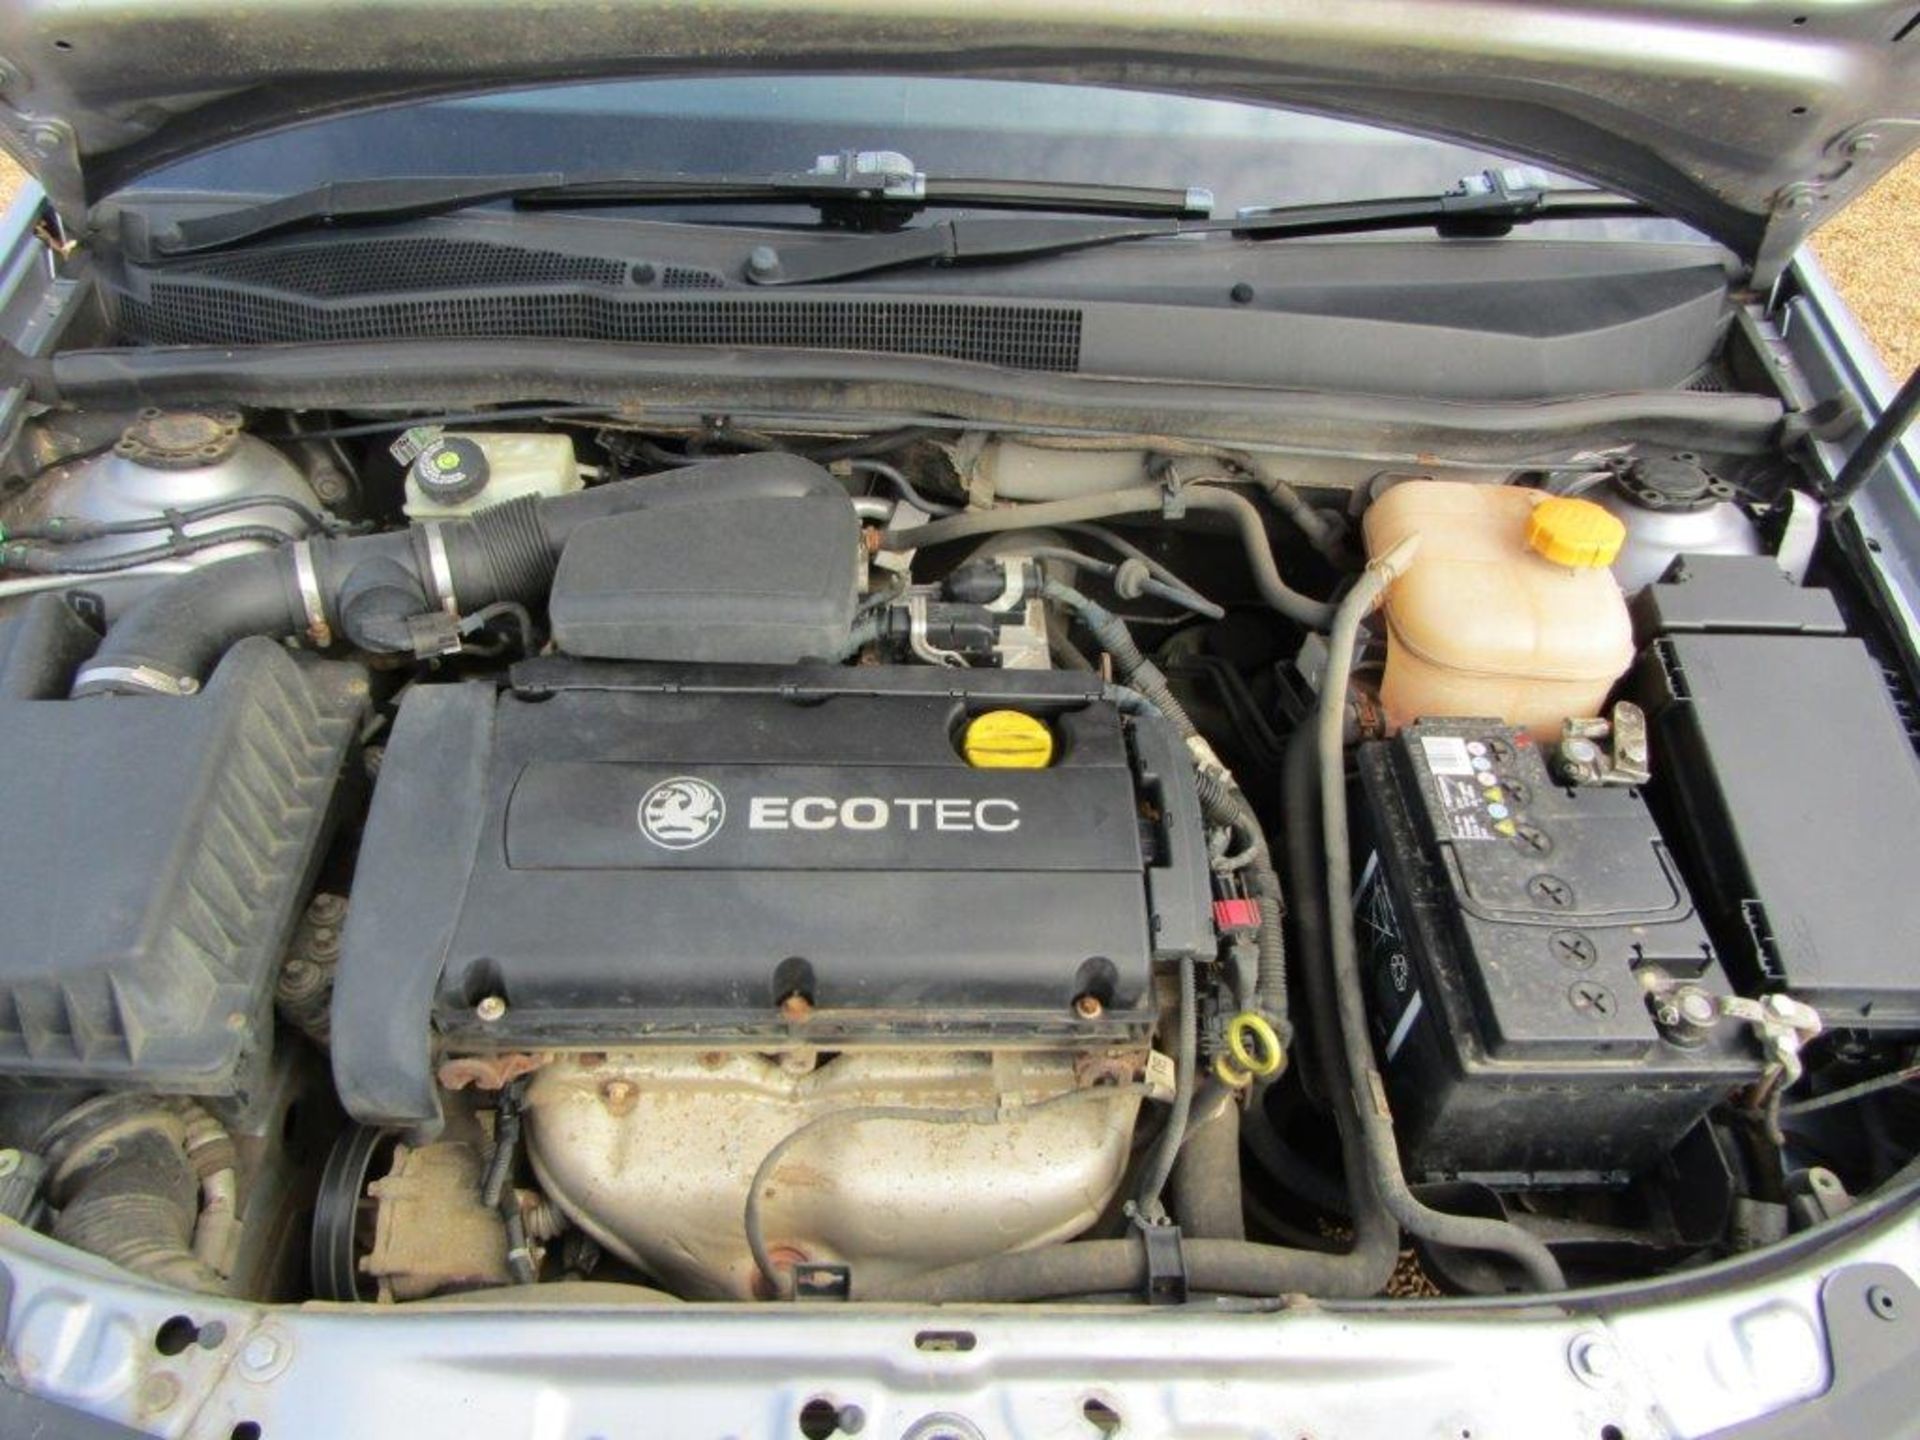 06 06 Vauxhall Astra Breeze - Image 17 of 21